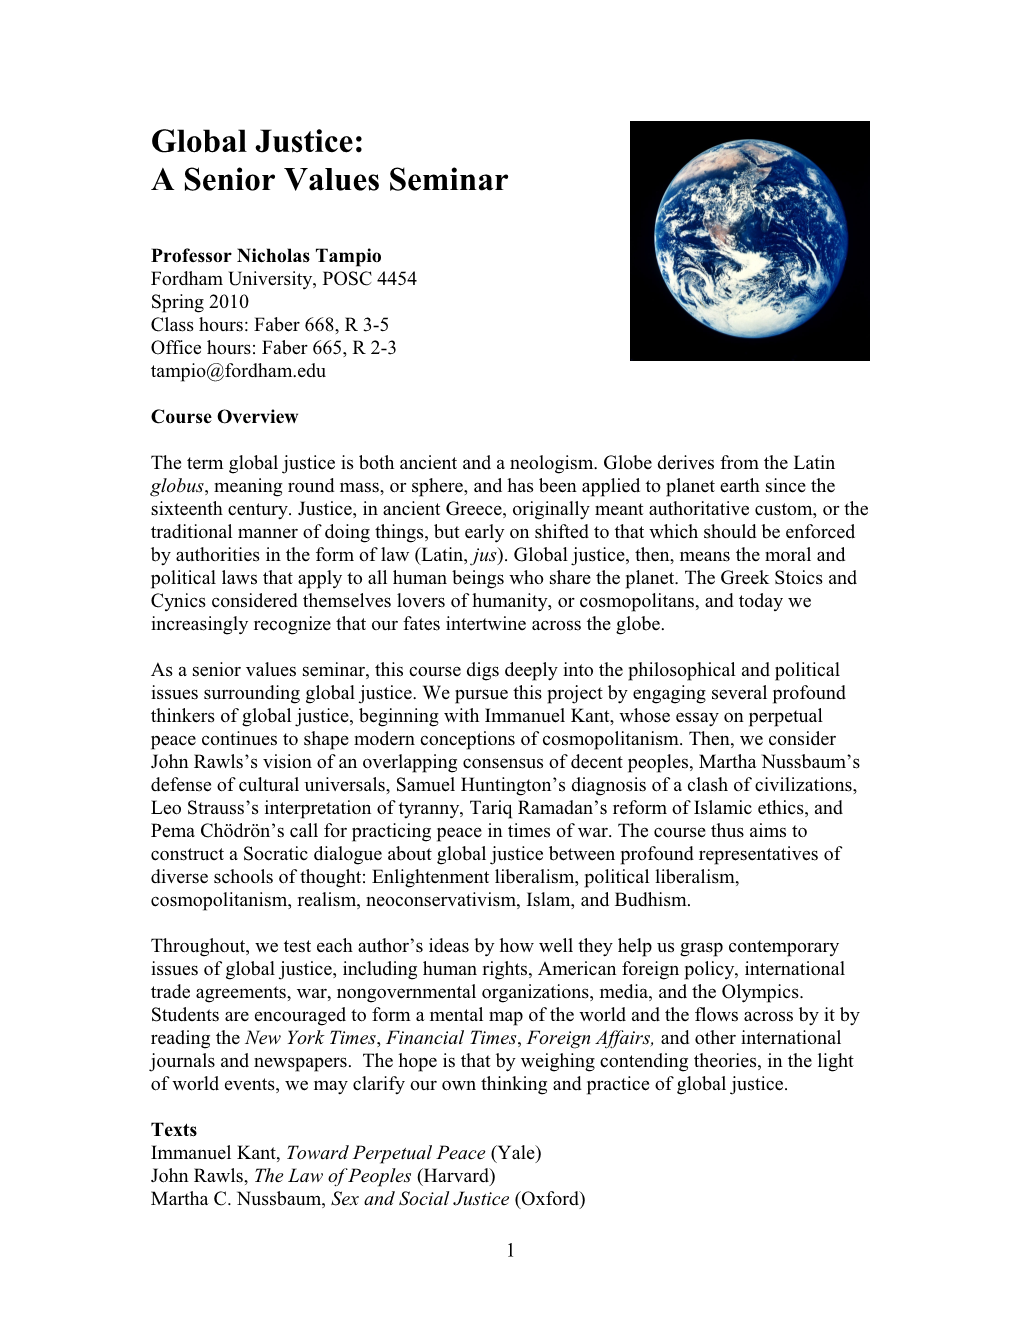 A Senior Values Seminar